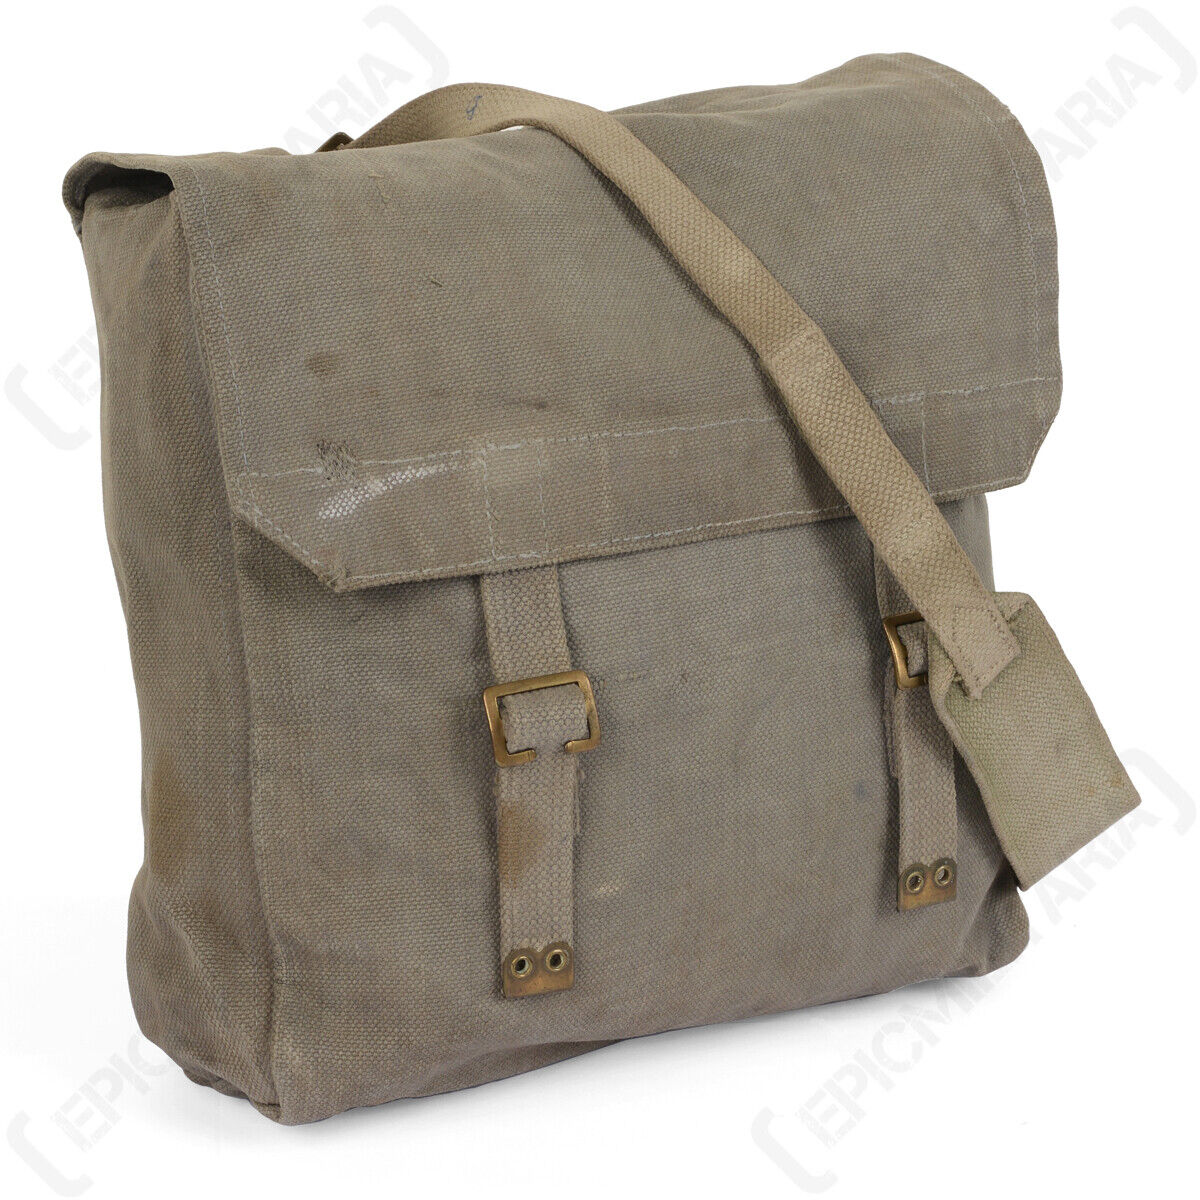 Original British 37 Pattern Large Pack with Strap - RAF Grey Canvas WW2 Type Bag